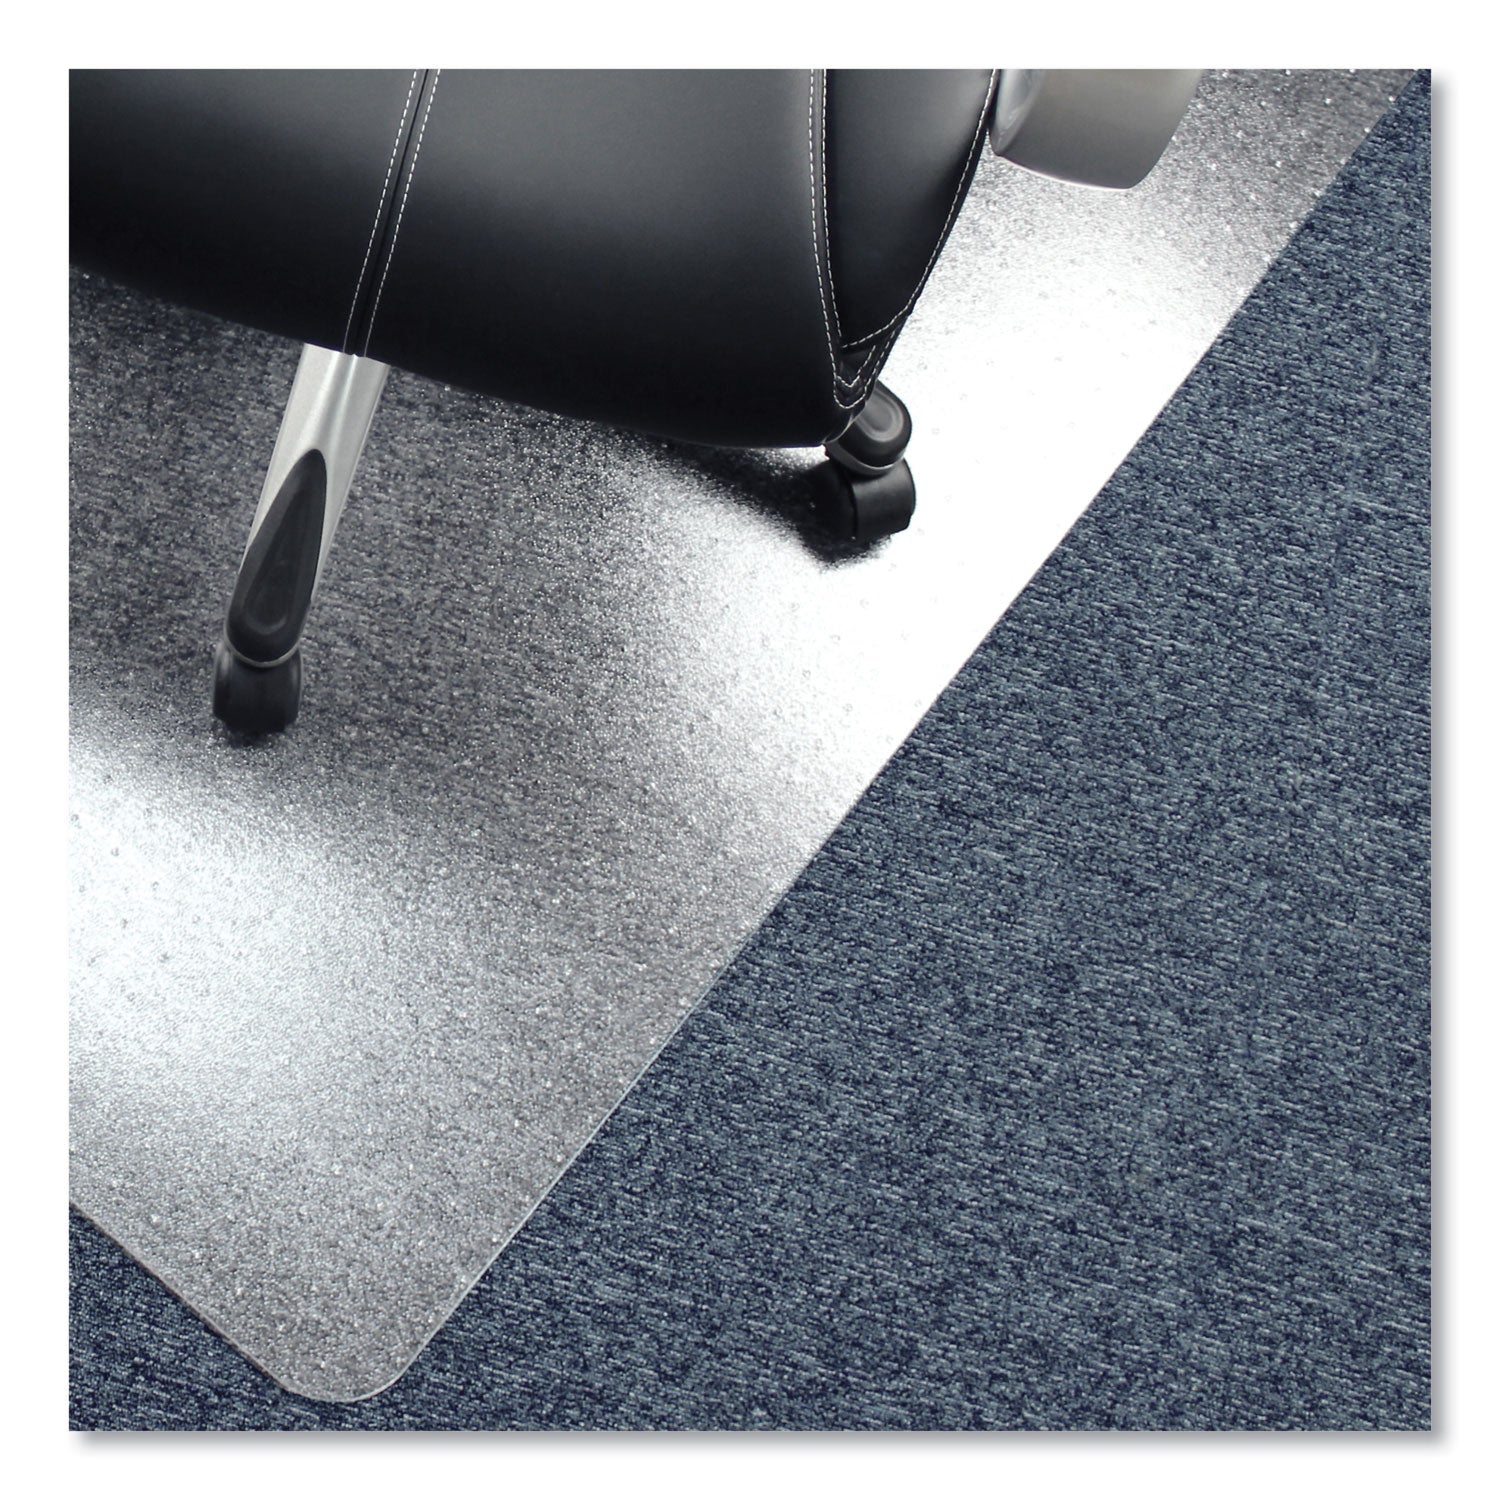 Cleartex Advantagemat Phthalate Free PVC Chair Mat for Low Pile Carpet, 60 x 48, Clear - 